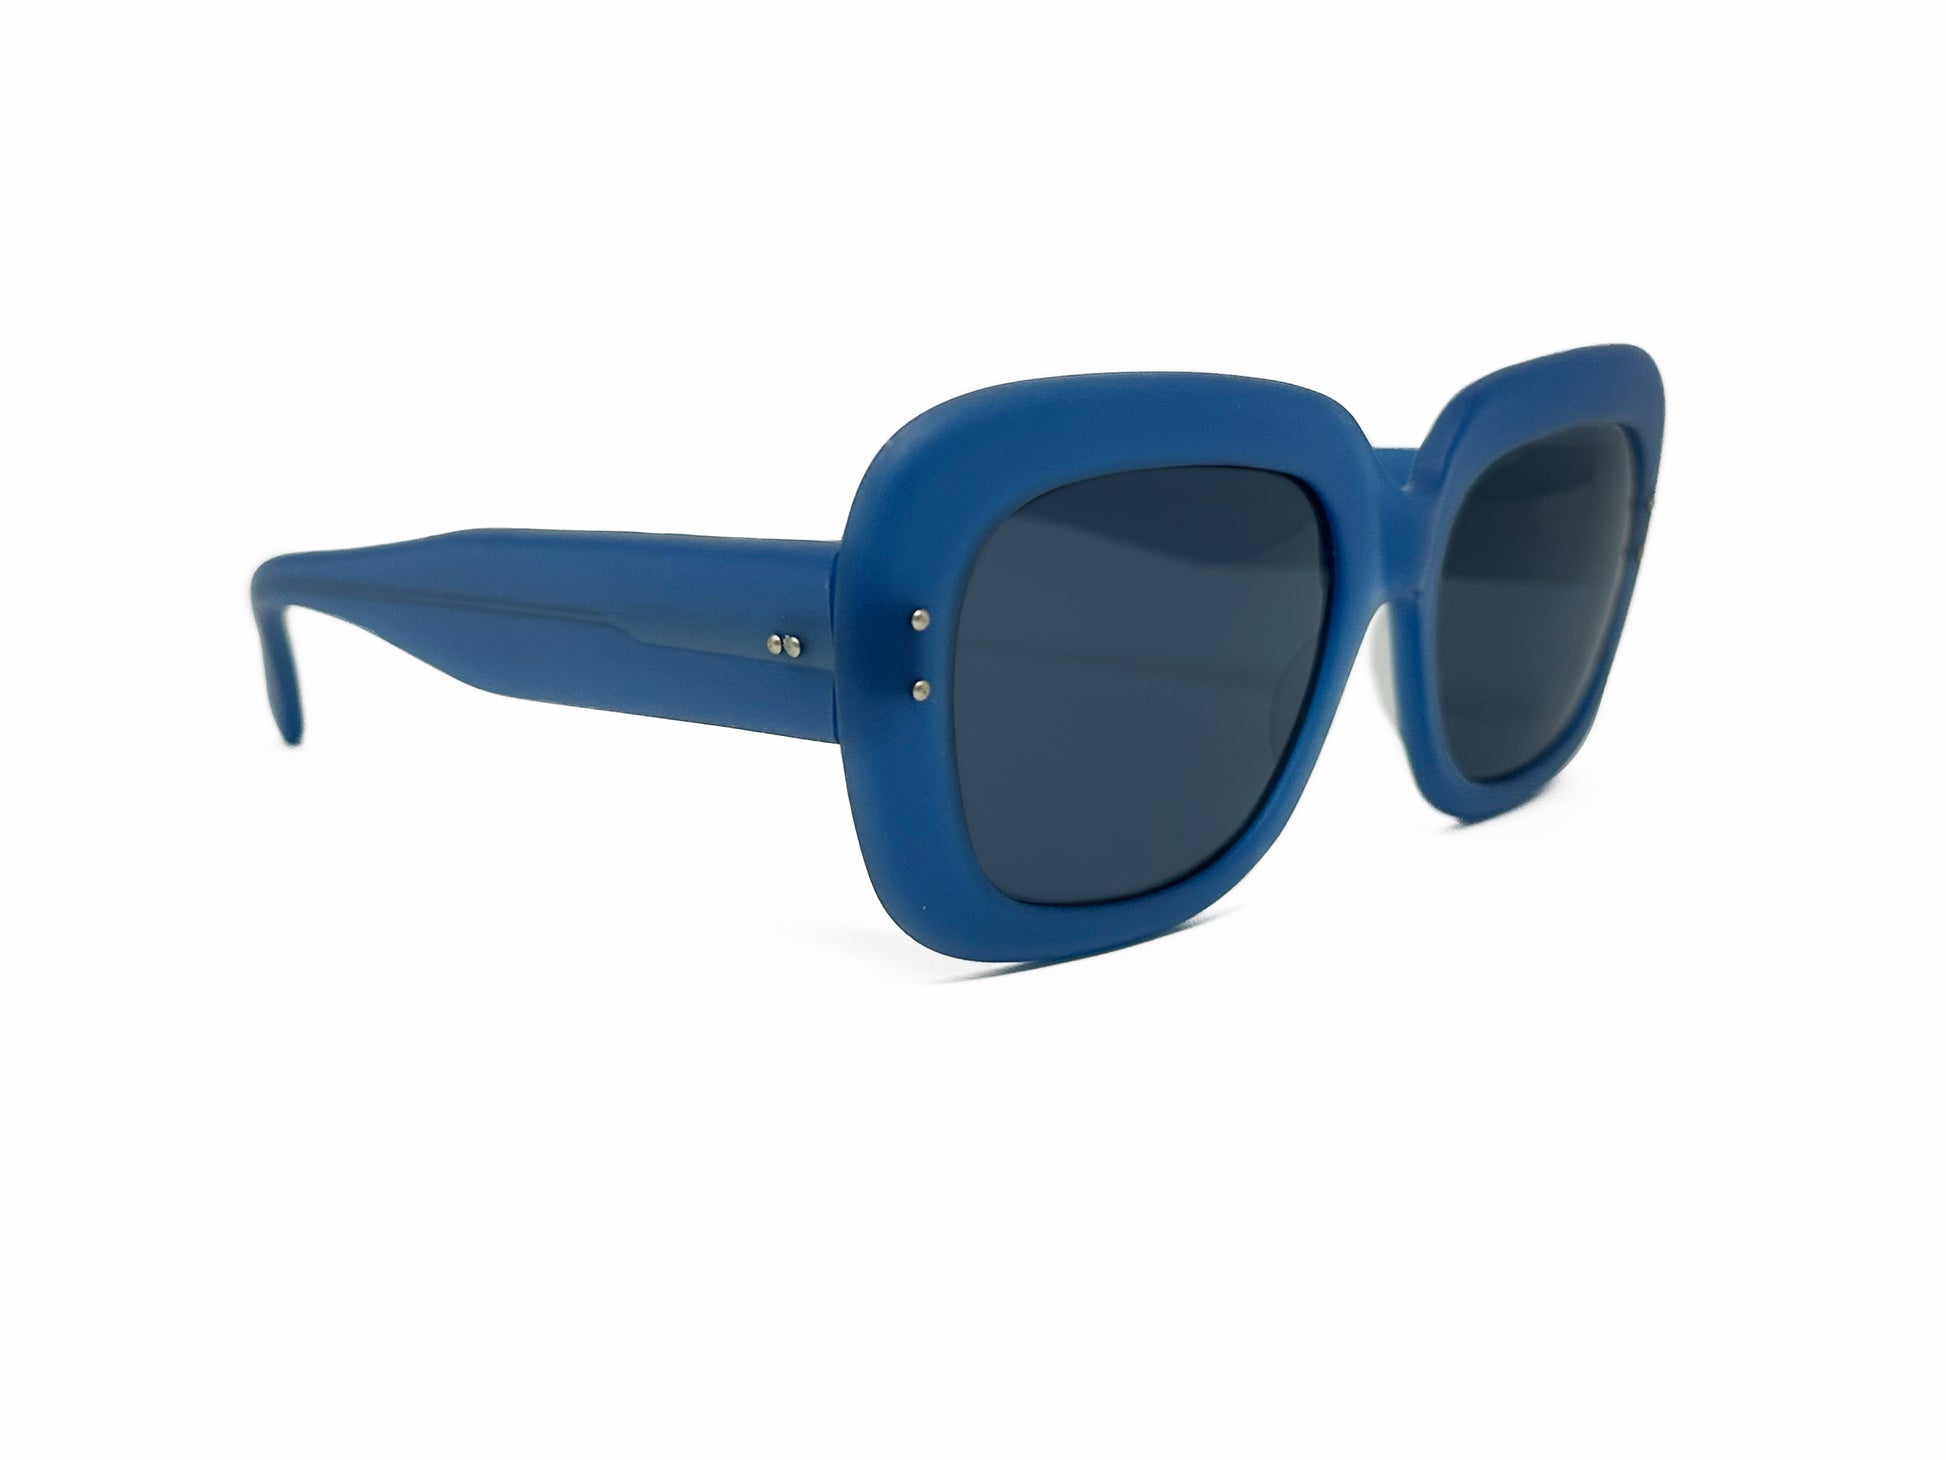 Kador rounded -square, plastic sunglasses. Model: M/1654. Color: Blue. Side view.